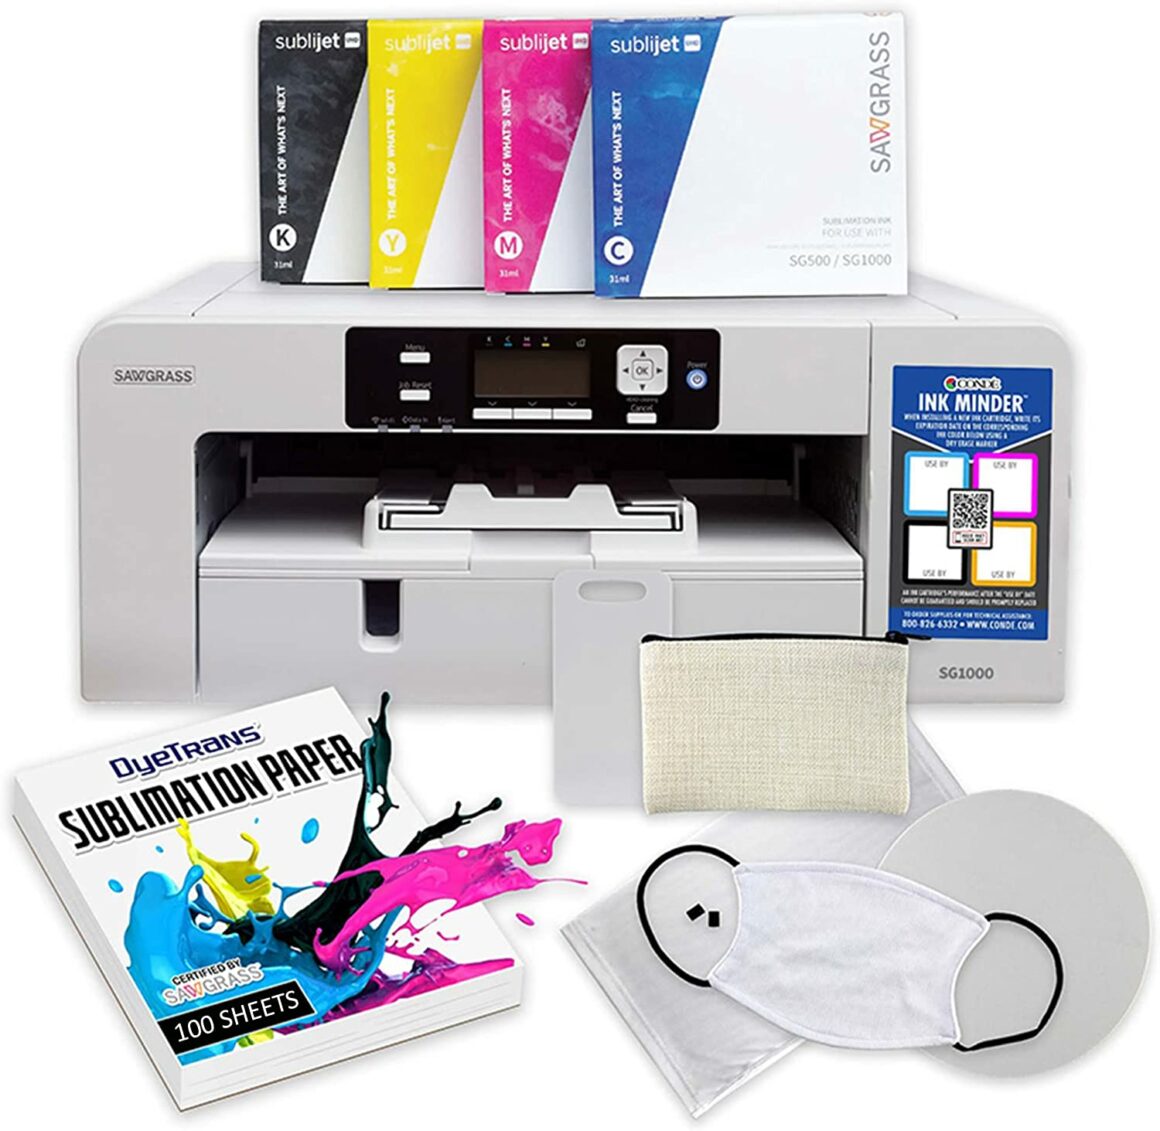 Sawgrass-SG1000-Sublimation-Printer-Sublijet-UHD-Standard-Installation-Kit